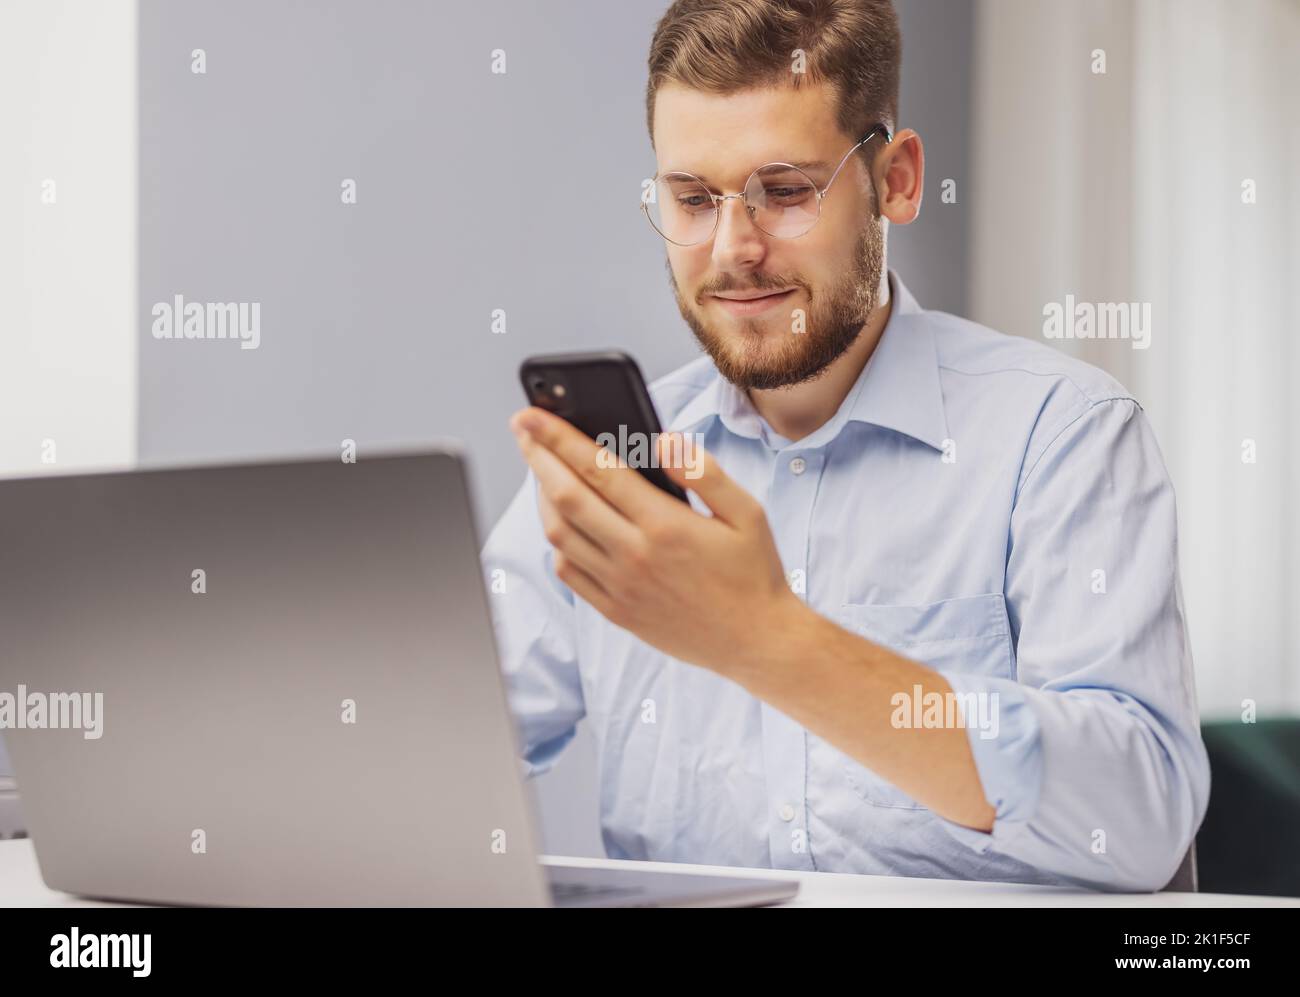 Man using smartphone Stock Photo